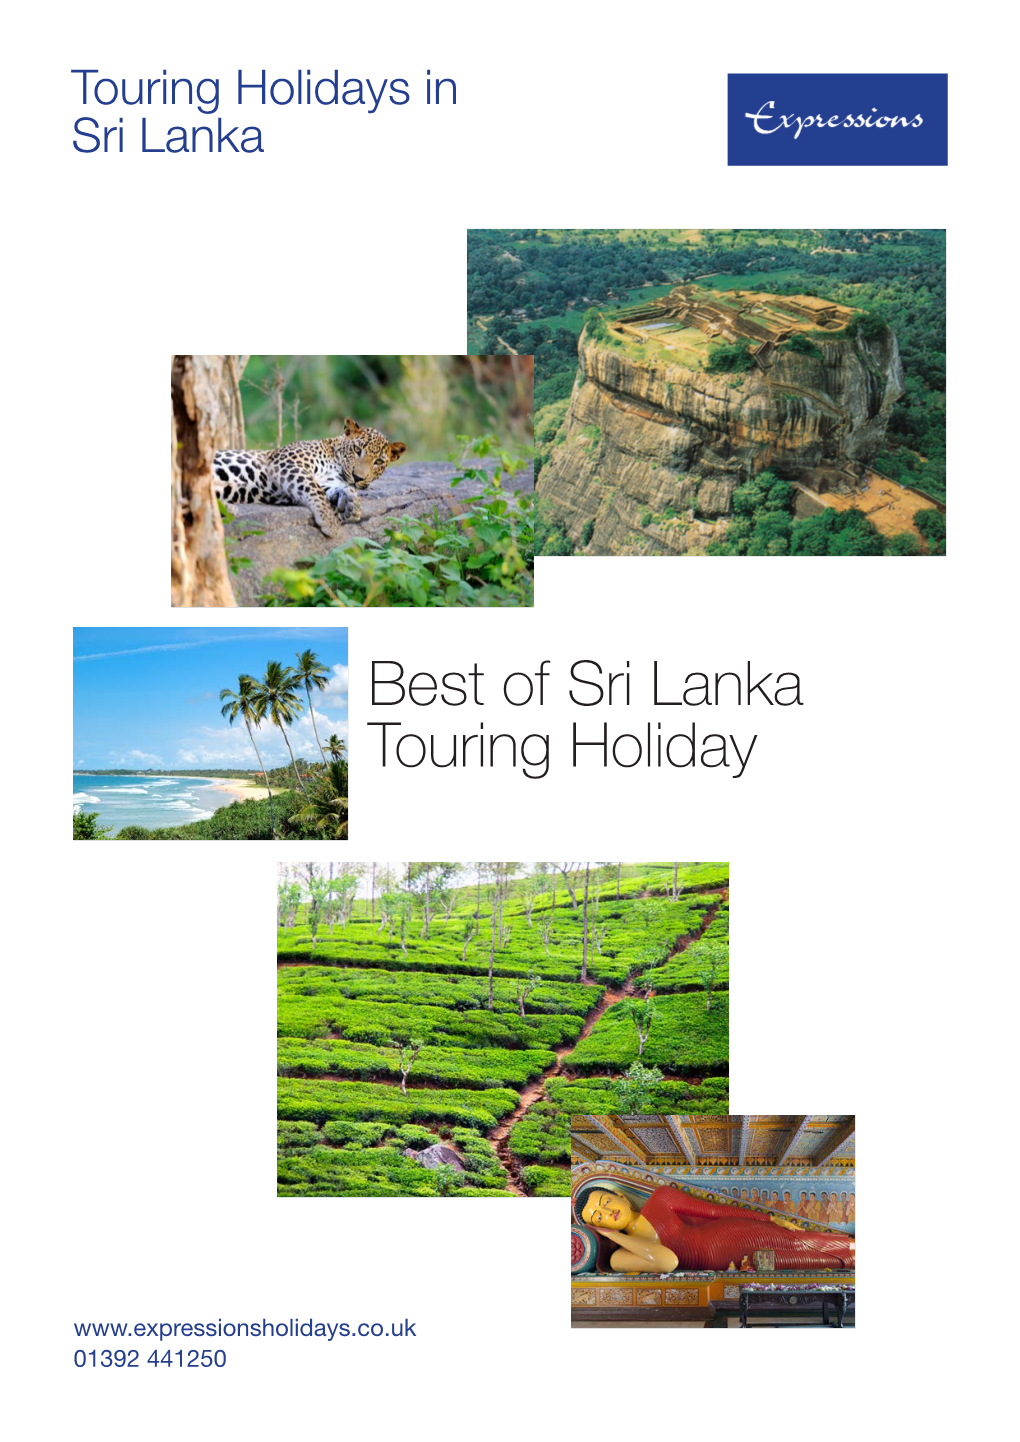 Best of Sri Lanka Touring Holiday